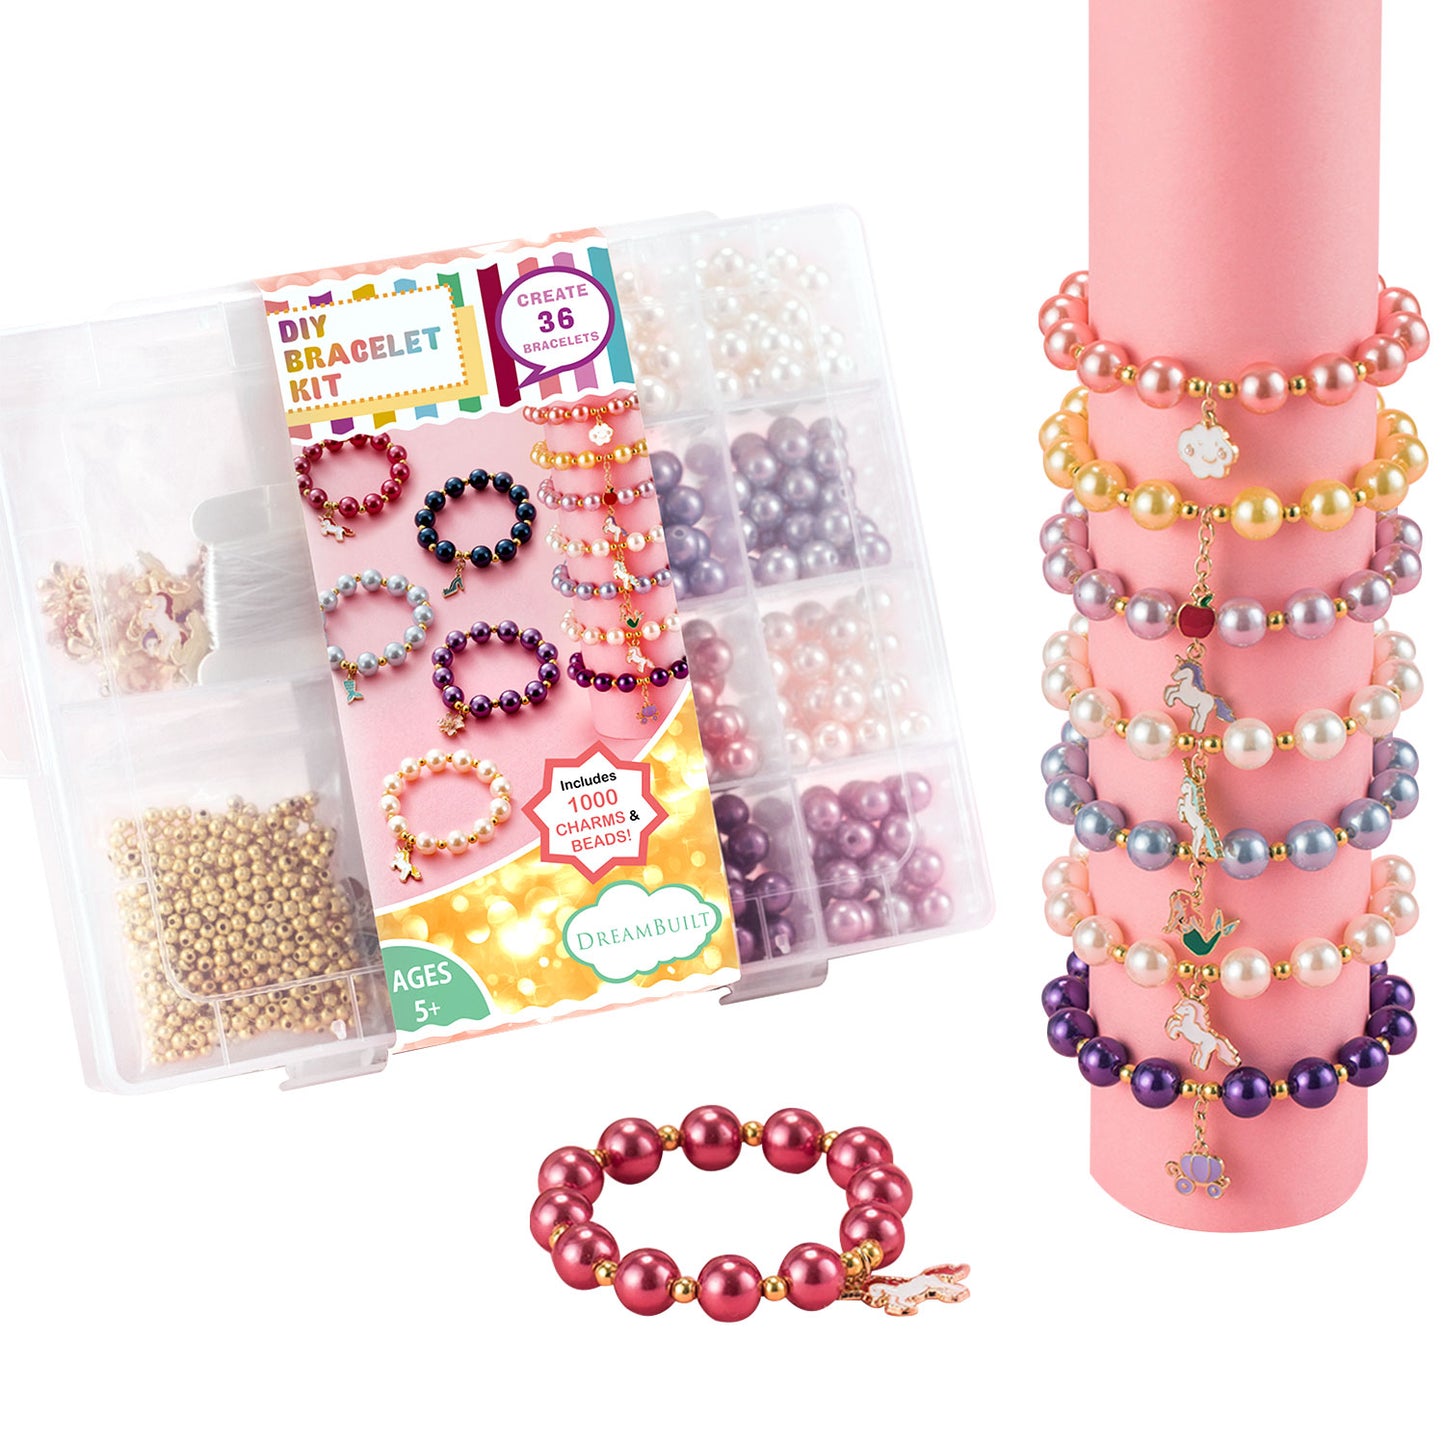 Friendship Bracelet Making Kit For Kids Gift,DIY Girls Colorful Elastic Bracelet  Making Set 